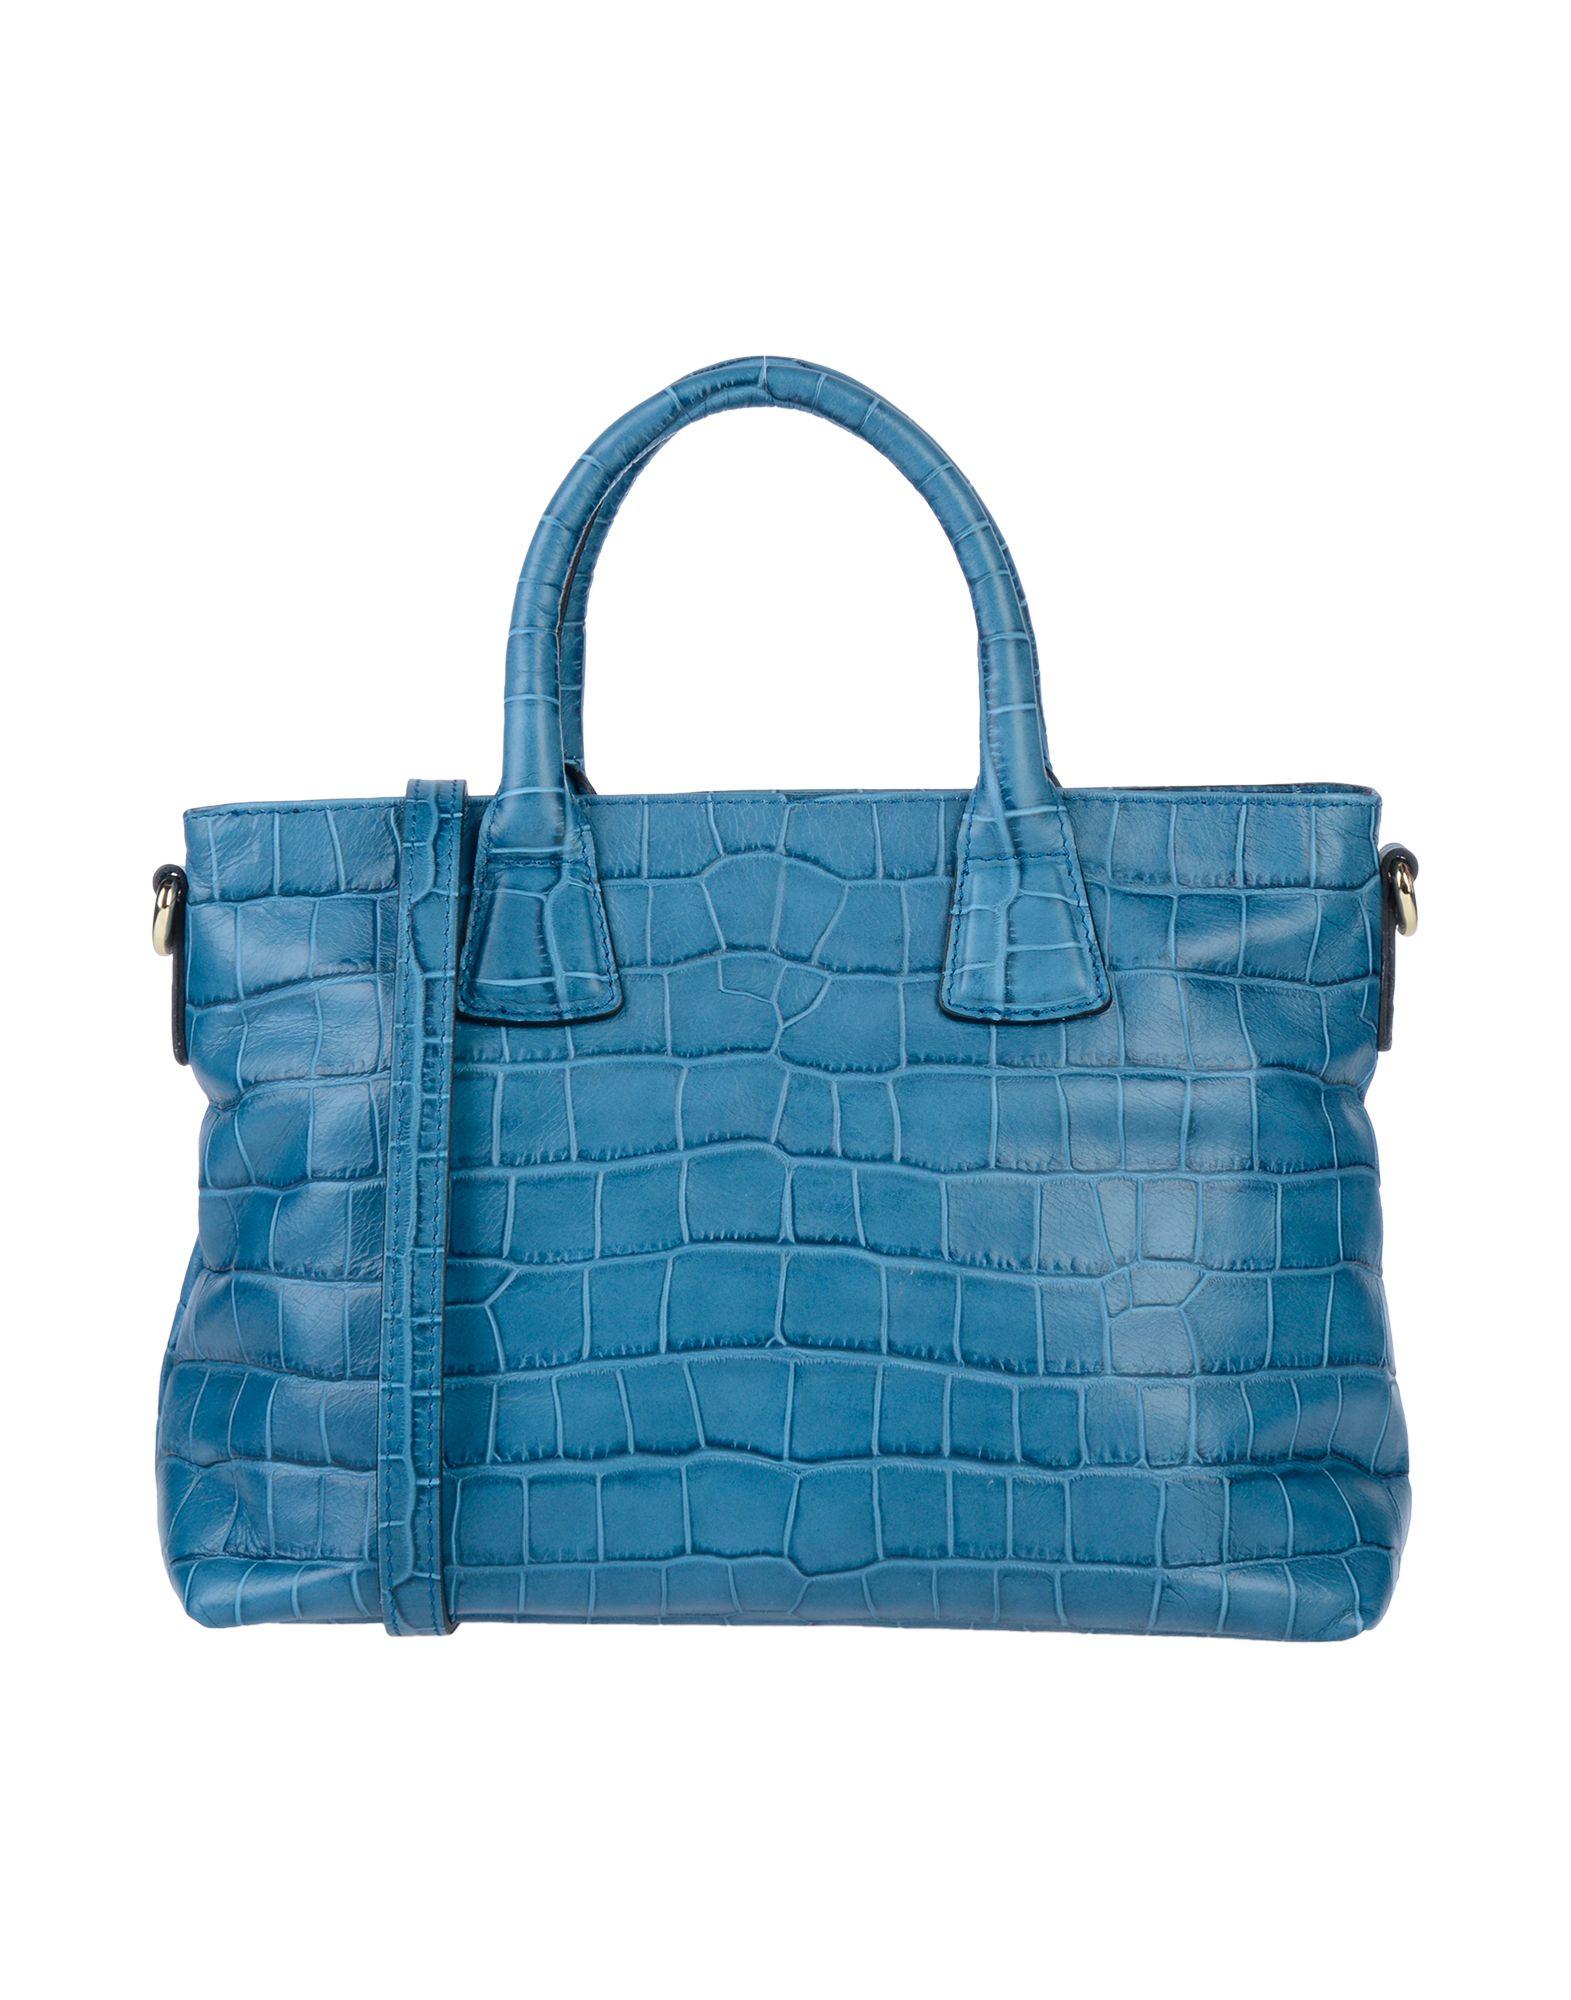 Gianni Chiarini Leather Handbag in Slate Blue (Blue) - Lyst